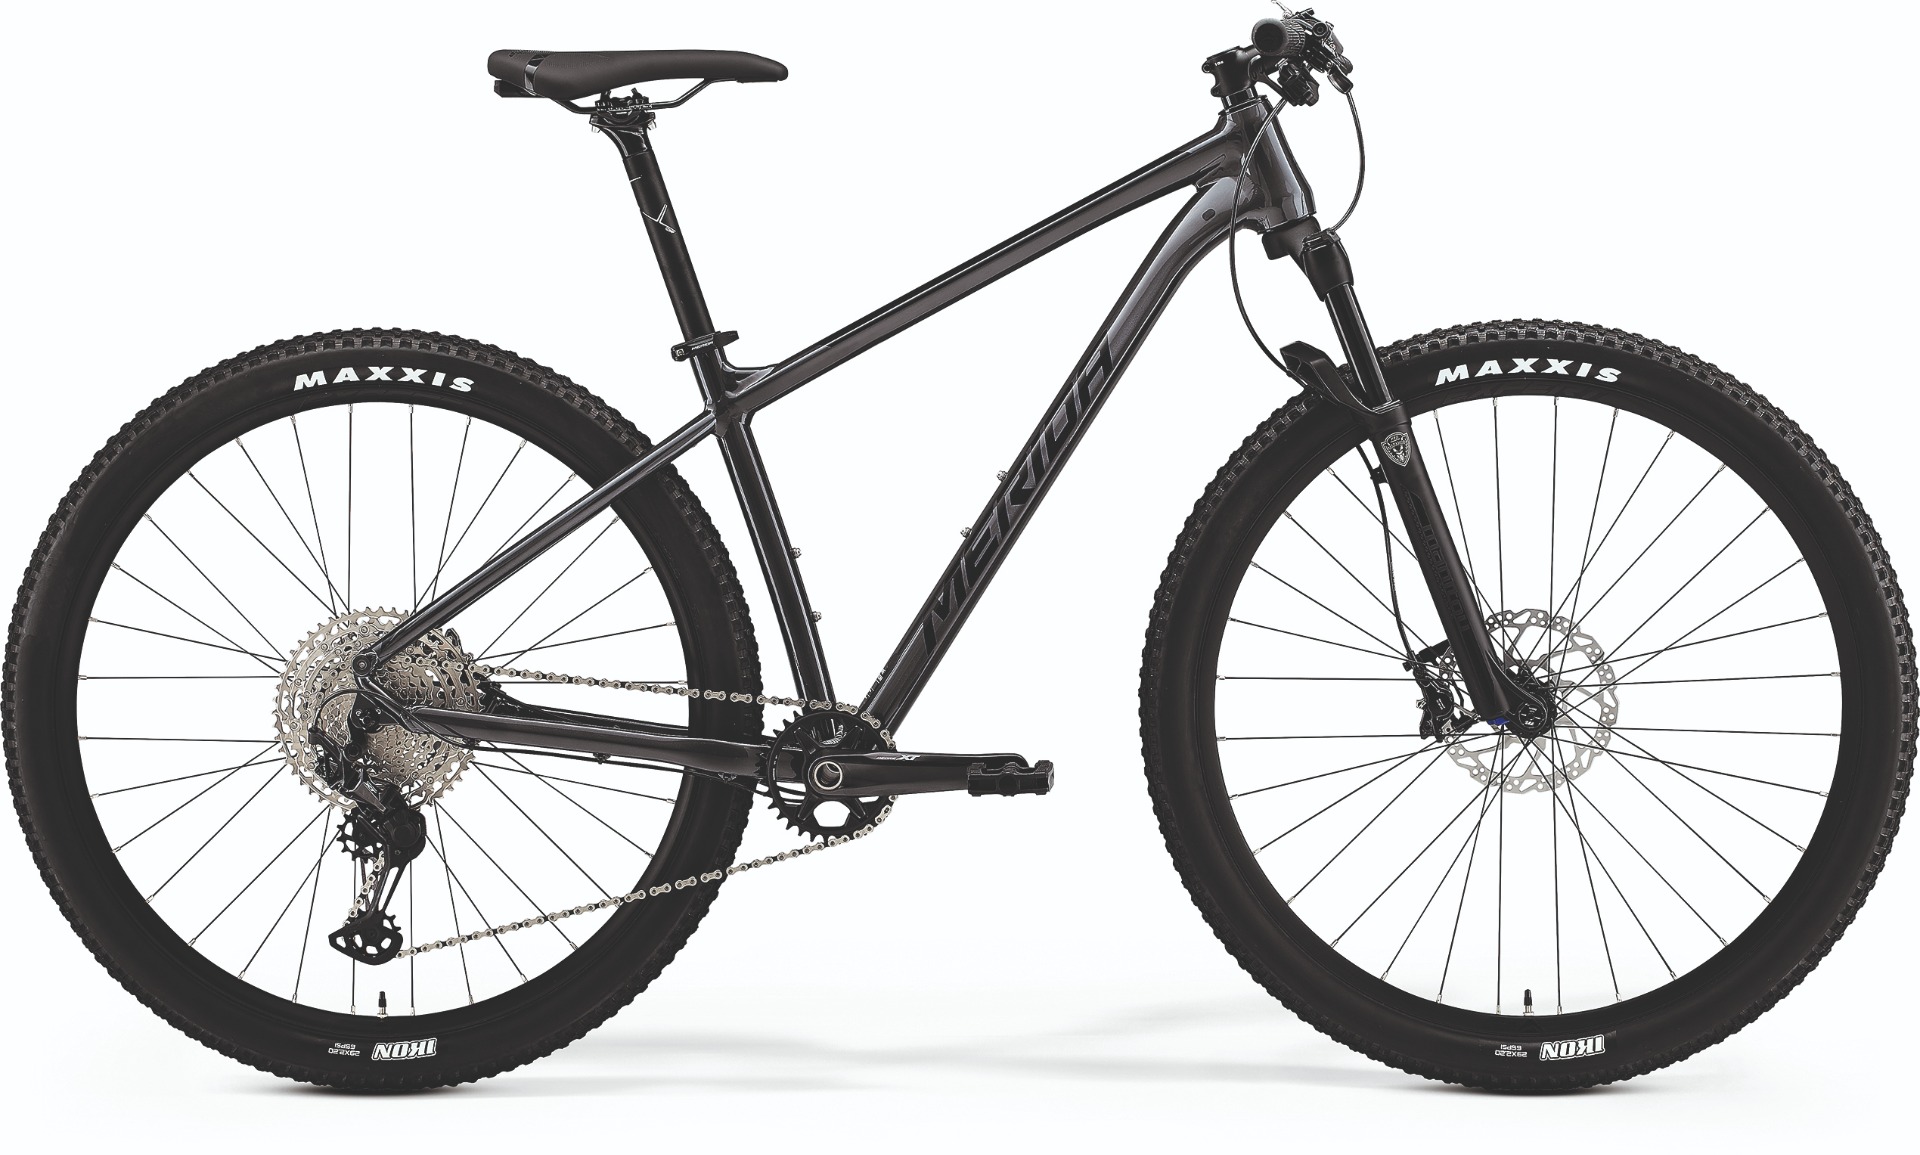 Bicycle Merida BIG.NINE XT-EDITION IV1 DARK SILVER(BLACK)